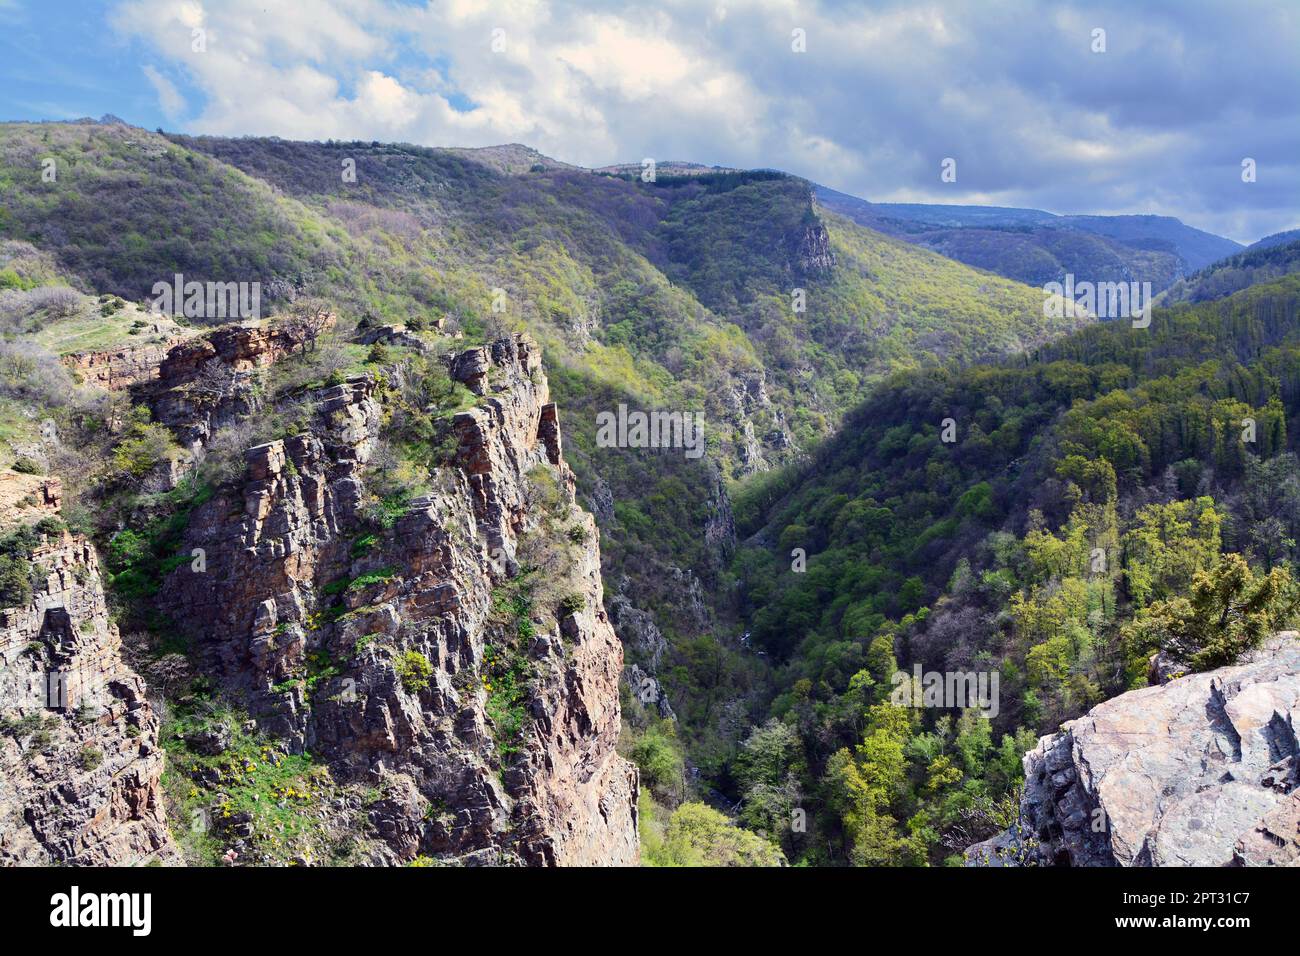 Meanders of Arda river, Kardzhali dam, Bulgaria in autumn with low water  level. Stock Photo